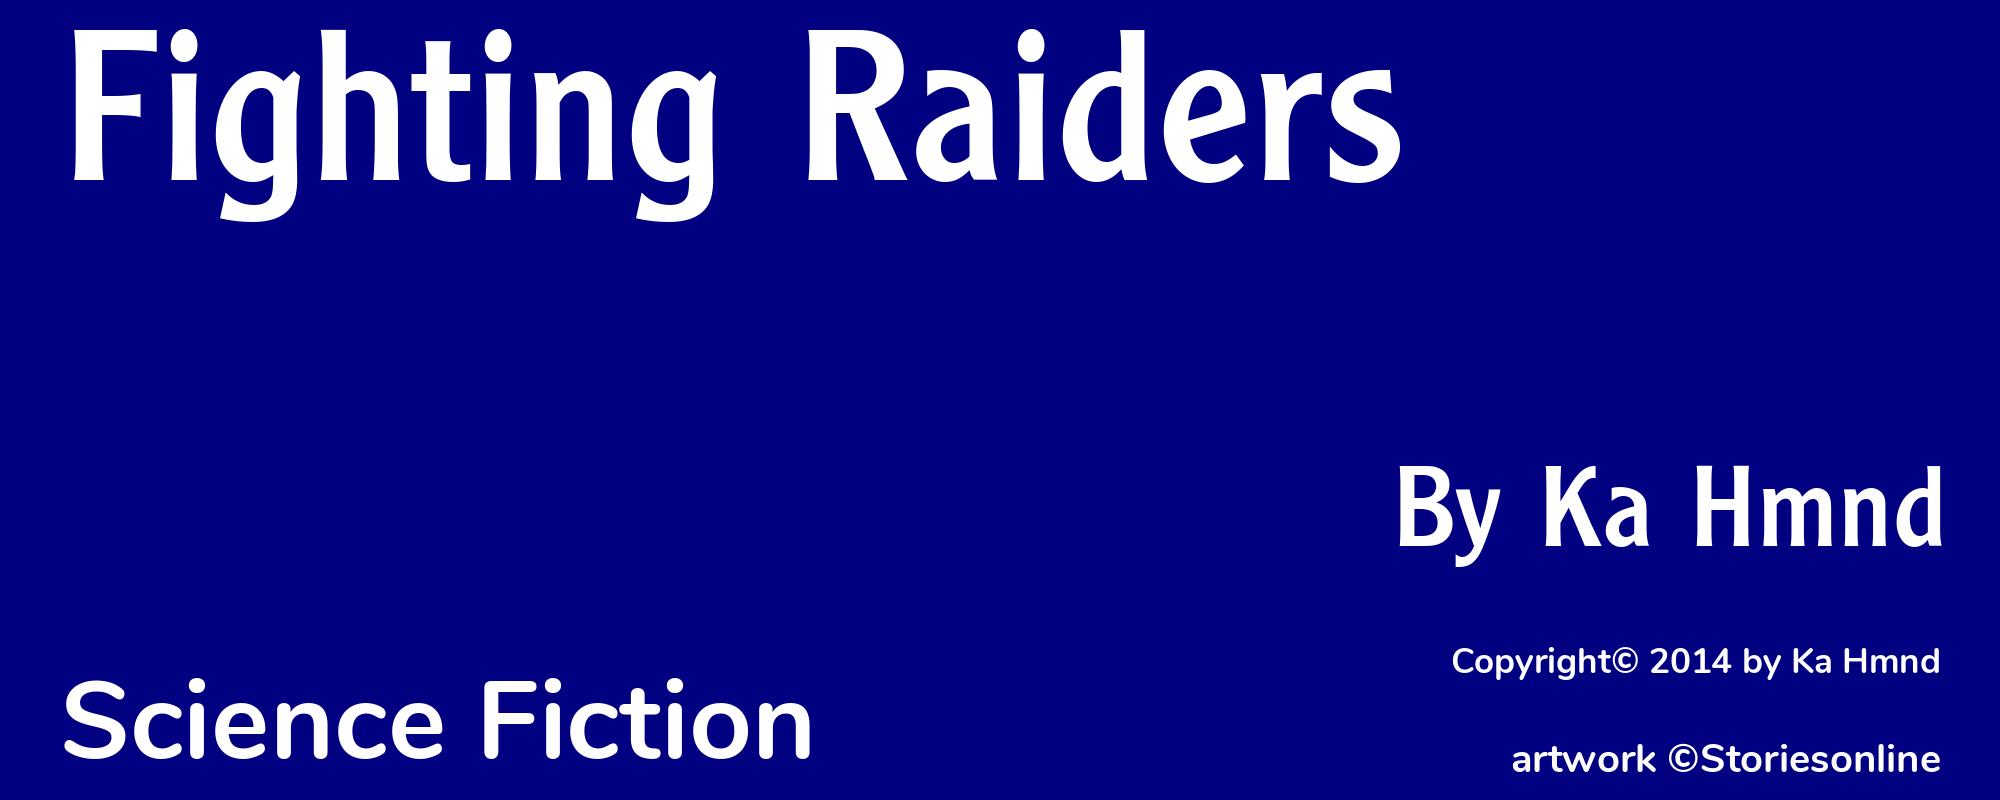 Fighting Raiders - Cover